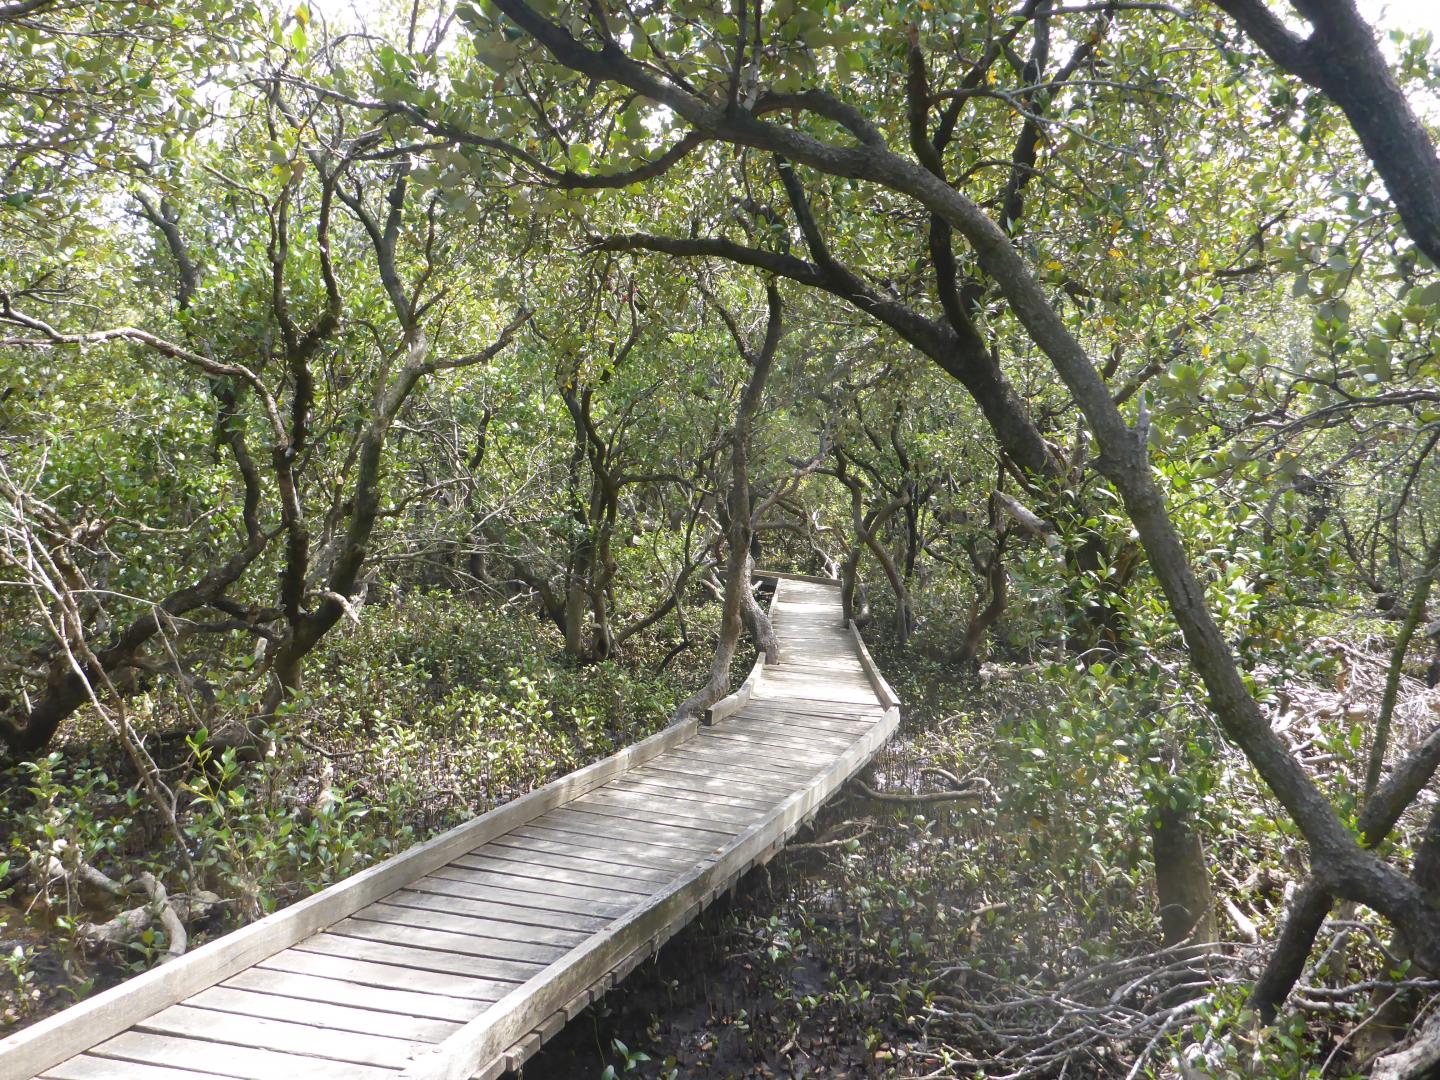 St Kilda mangrove trail